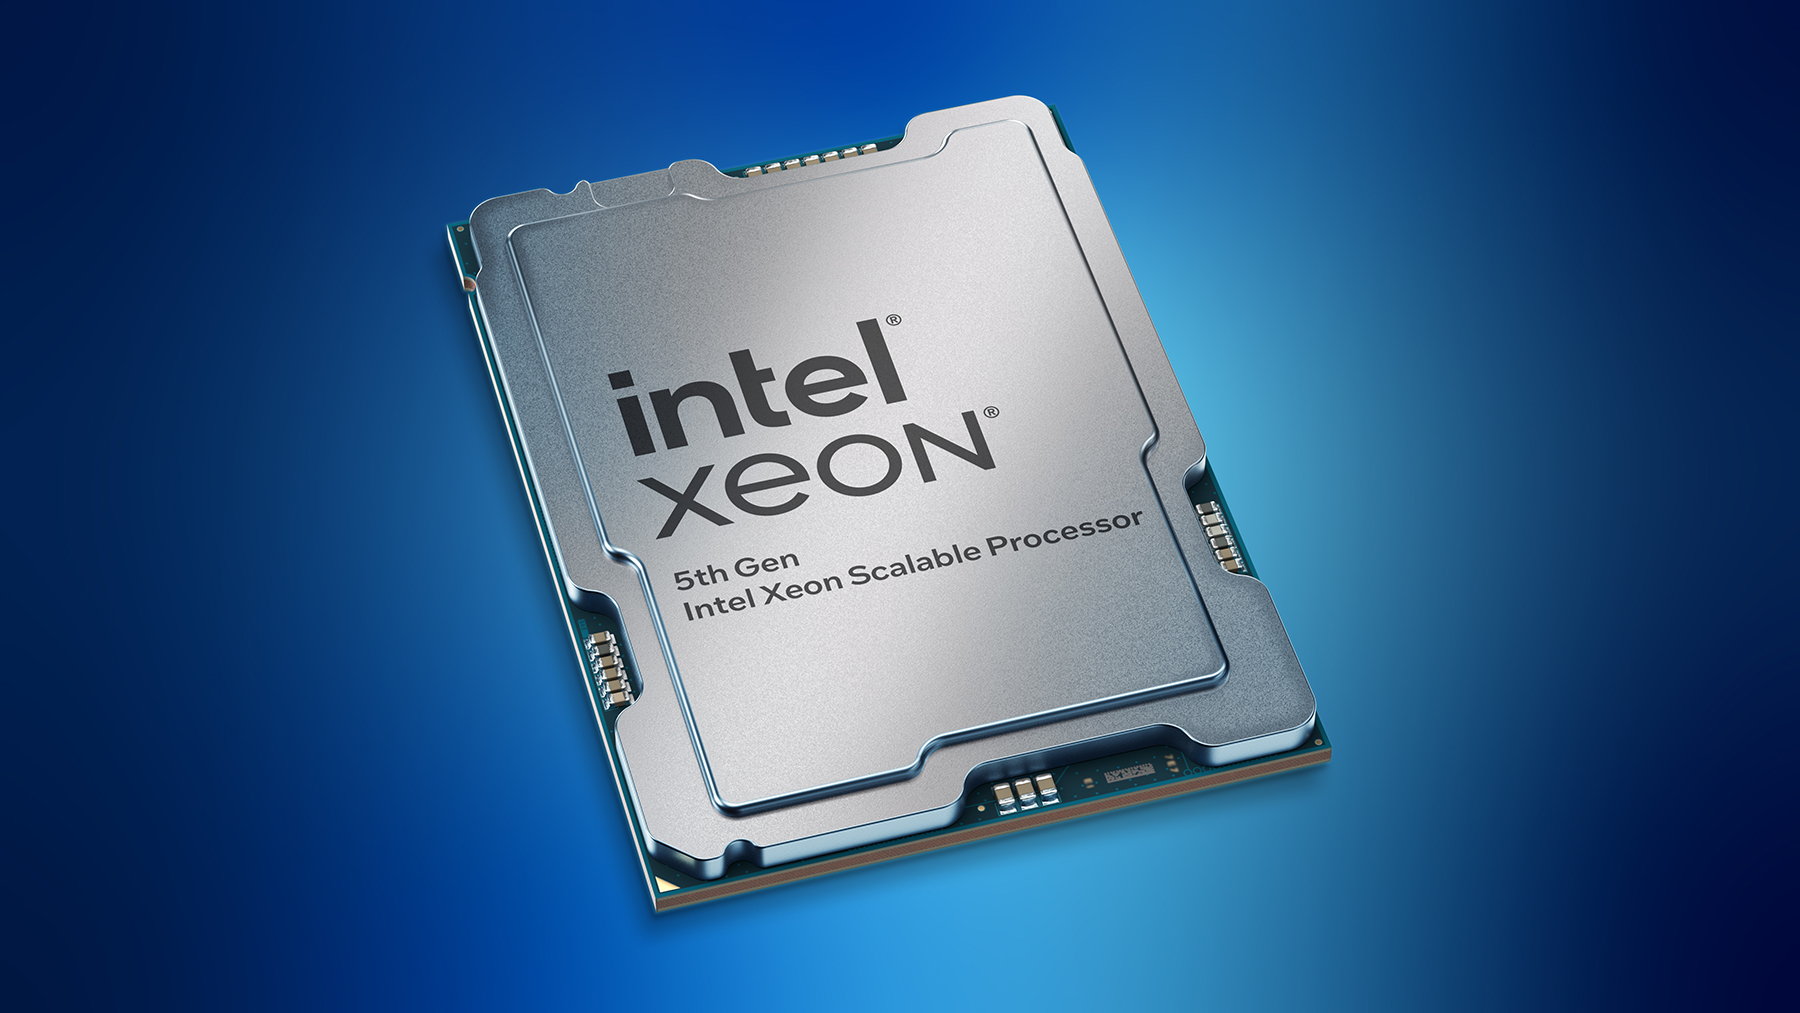 Intel 5th Gen Xeon